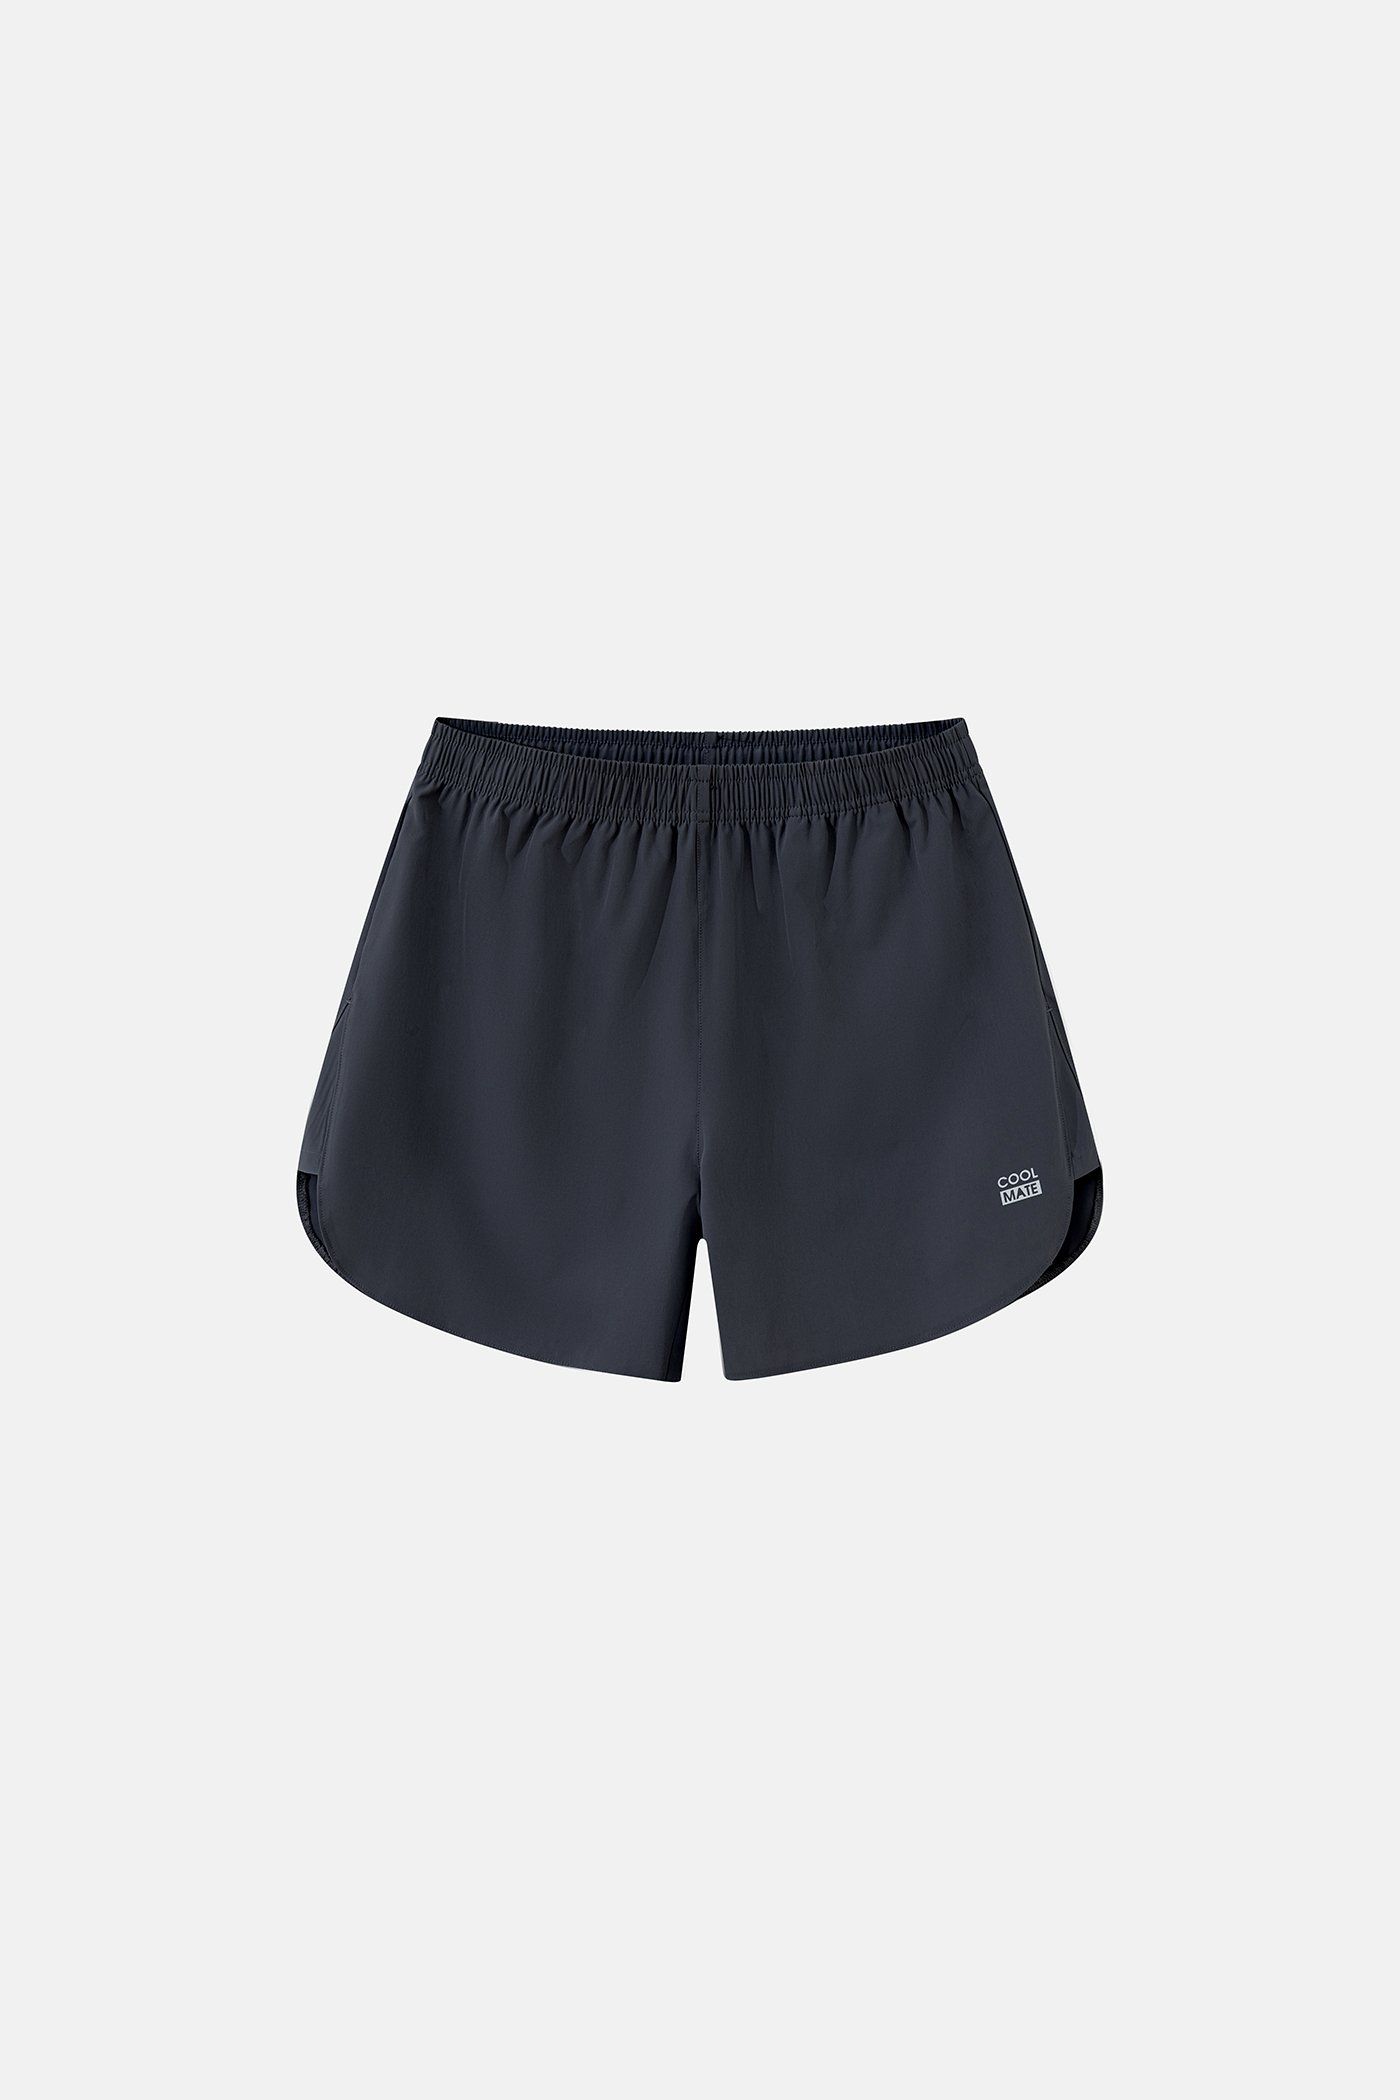 Combo 3 Shorts chạy bộ Basics  8